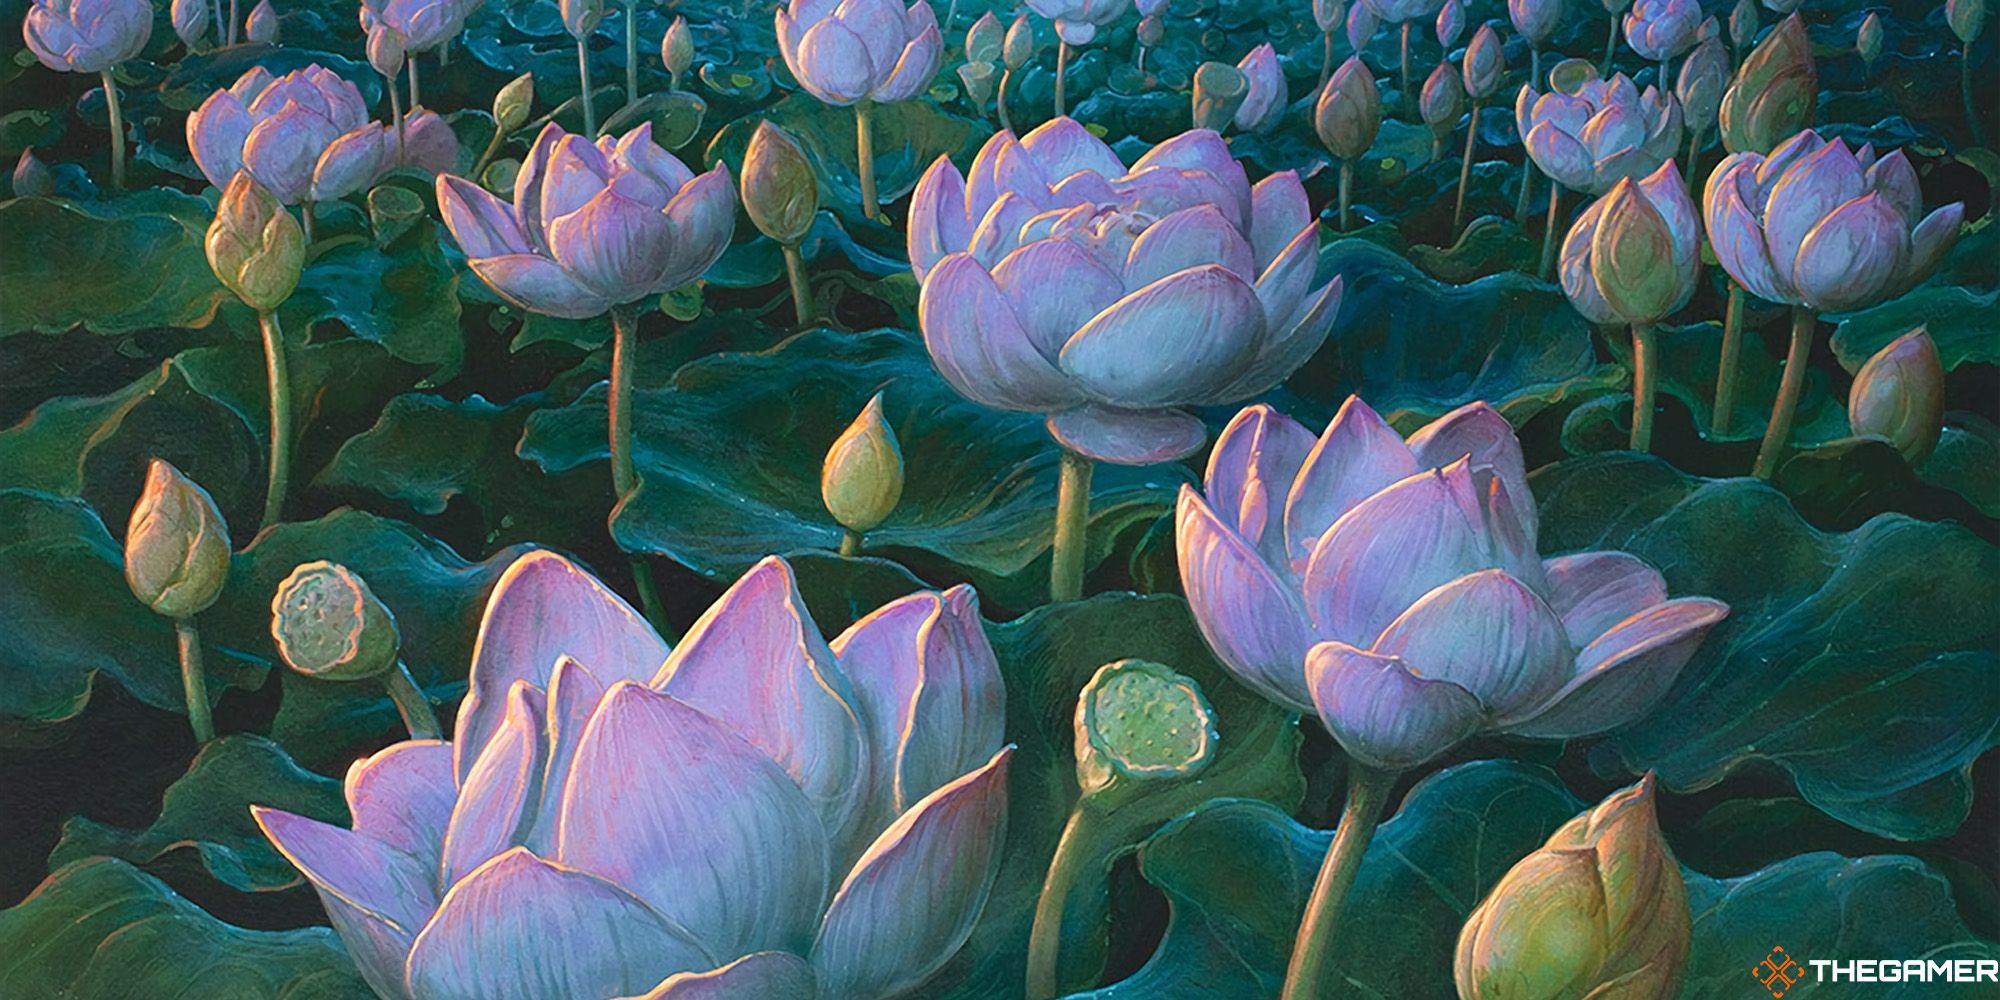 Lotus Field by John Avon